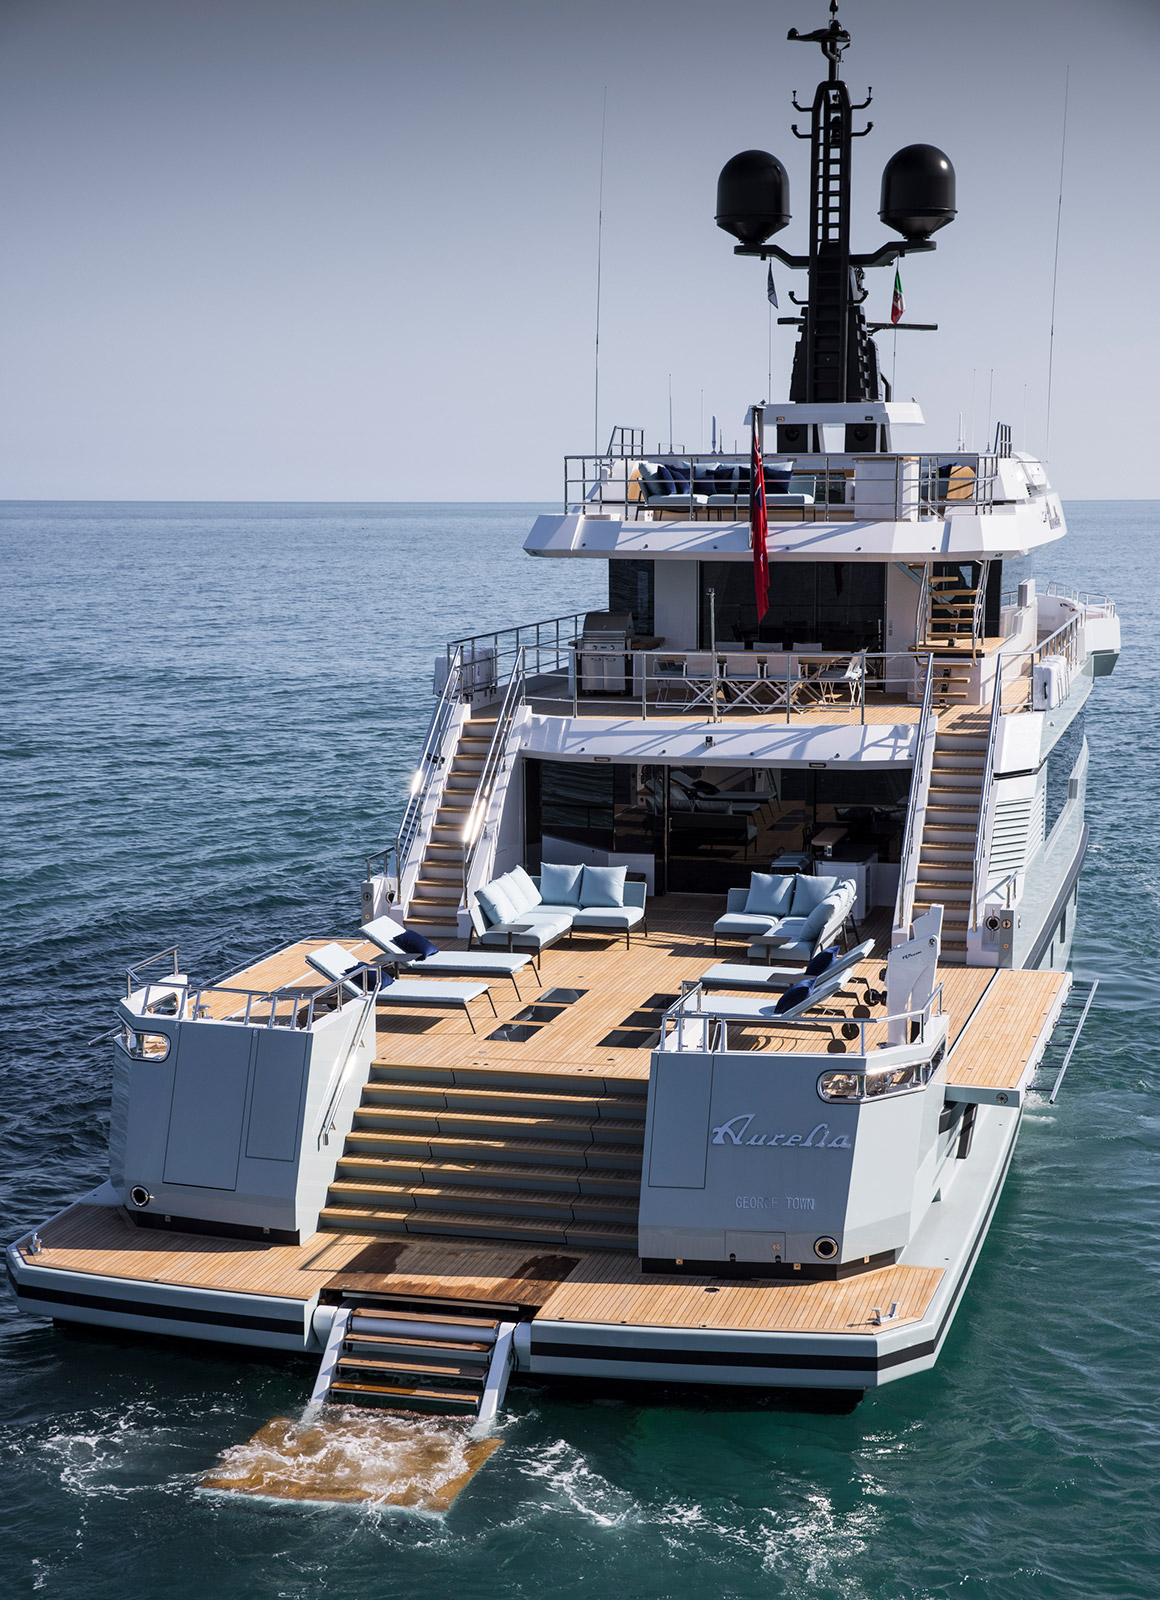 130 cdm flexplorer expedition yacht price